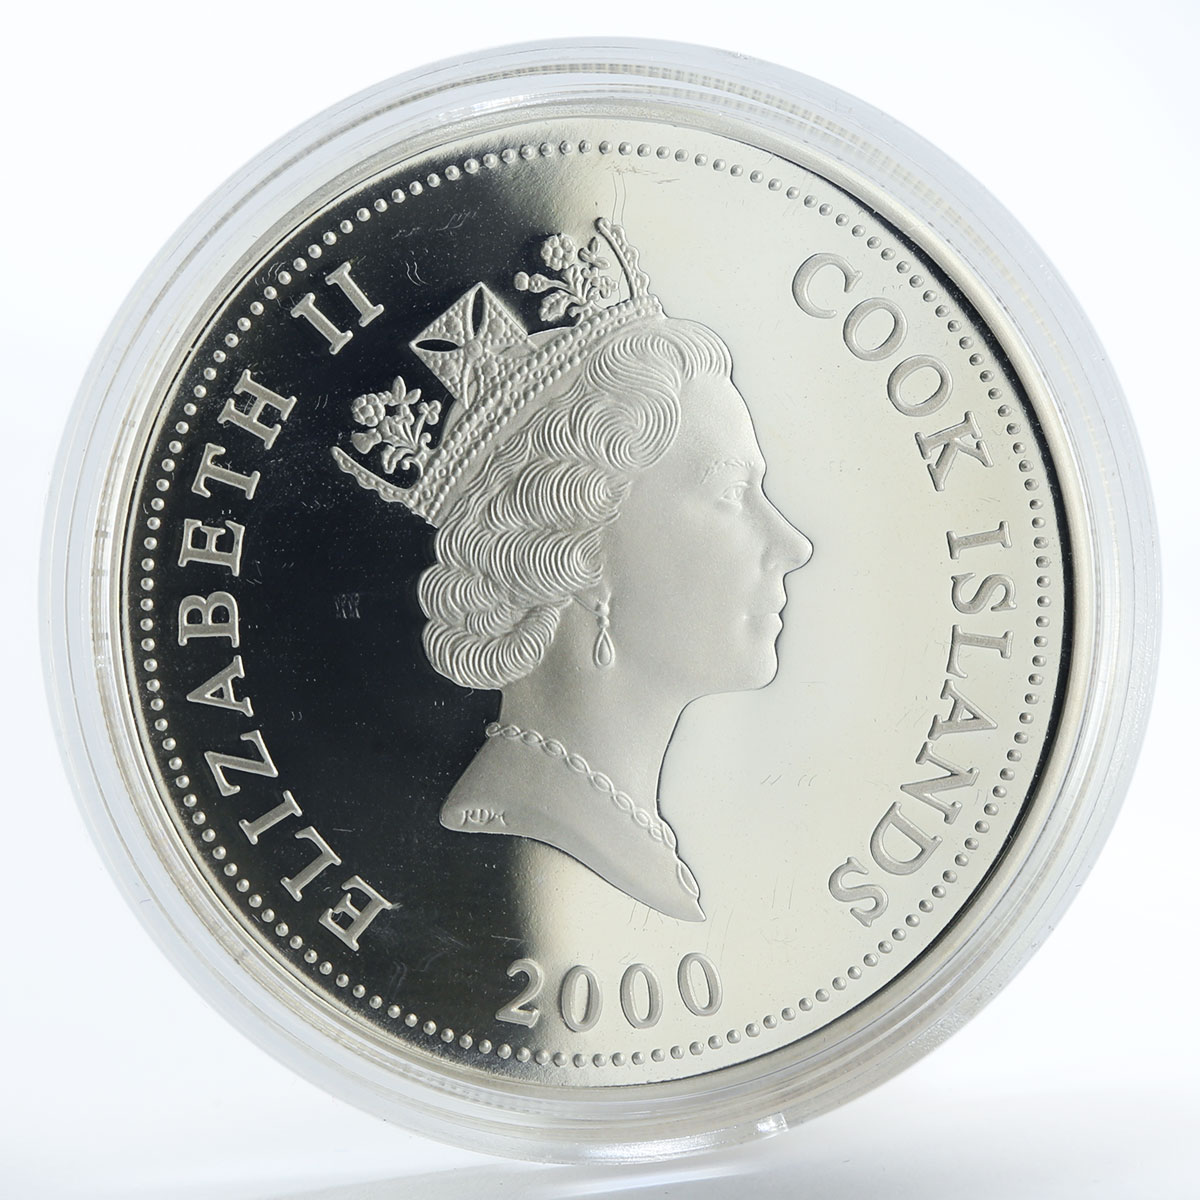 Cook Islands 1 dollar Cuckoo Wasp proof silver coin 2000